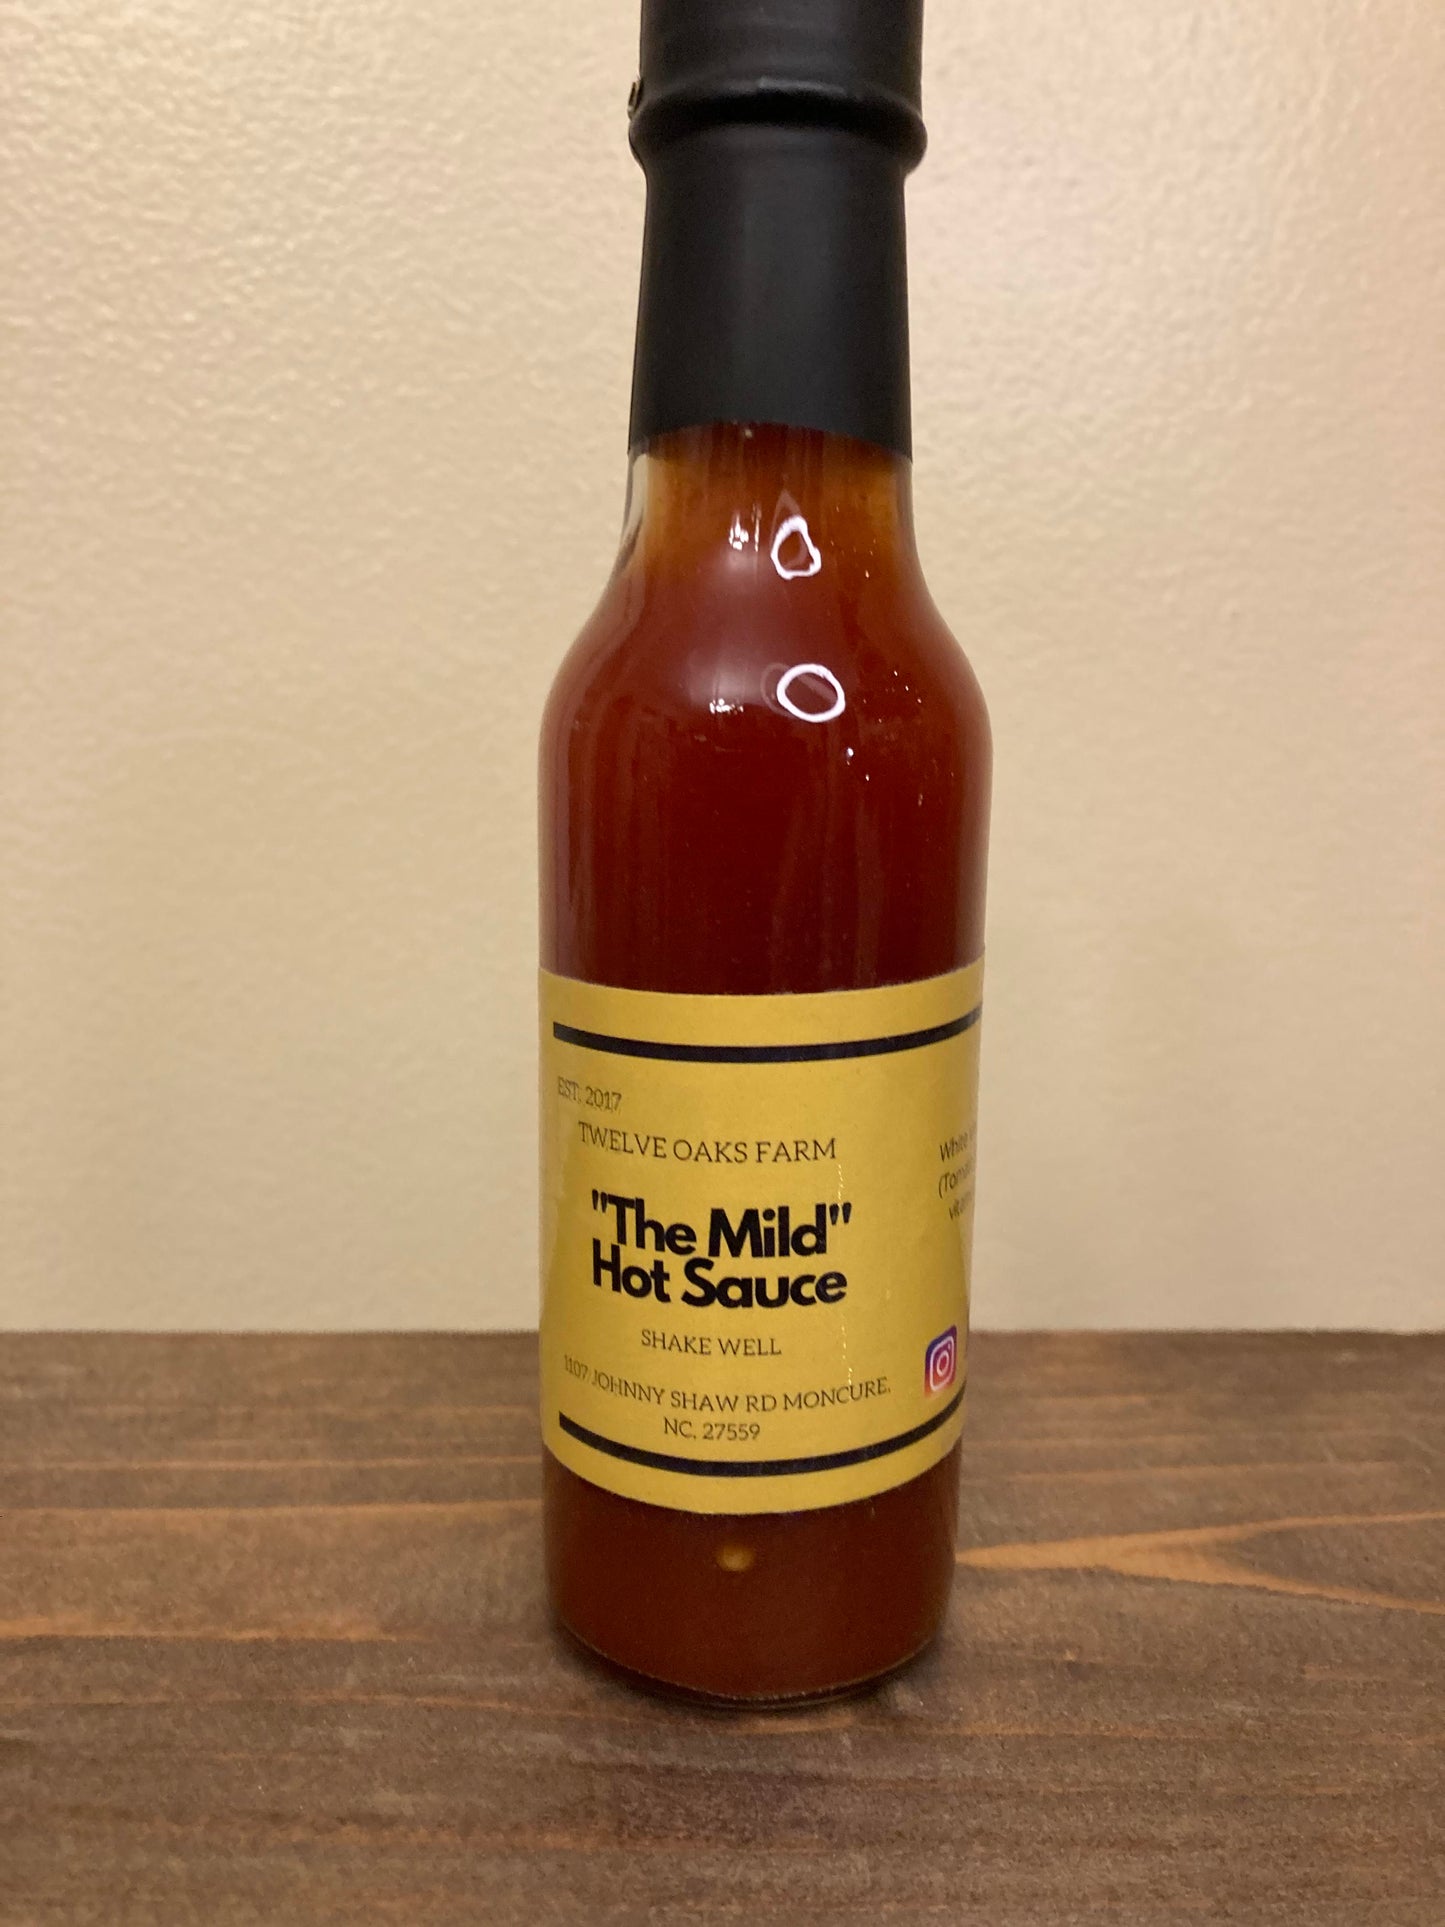 "The Mild" Hot Sauce